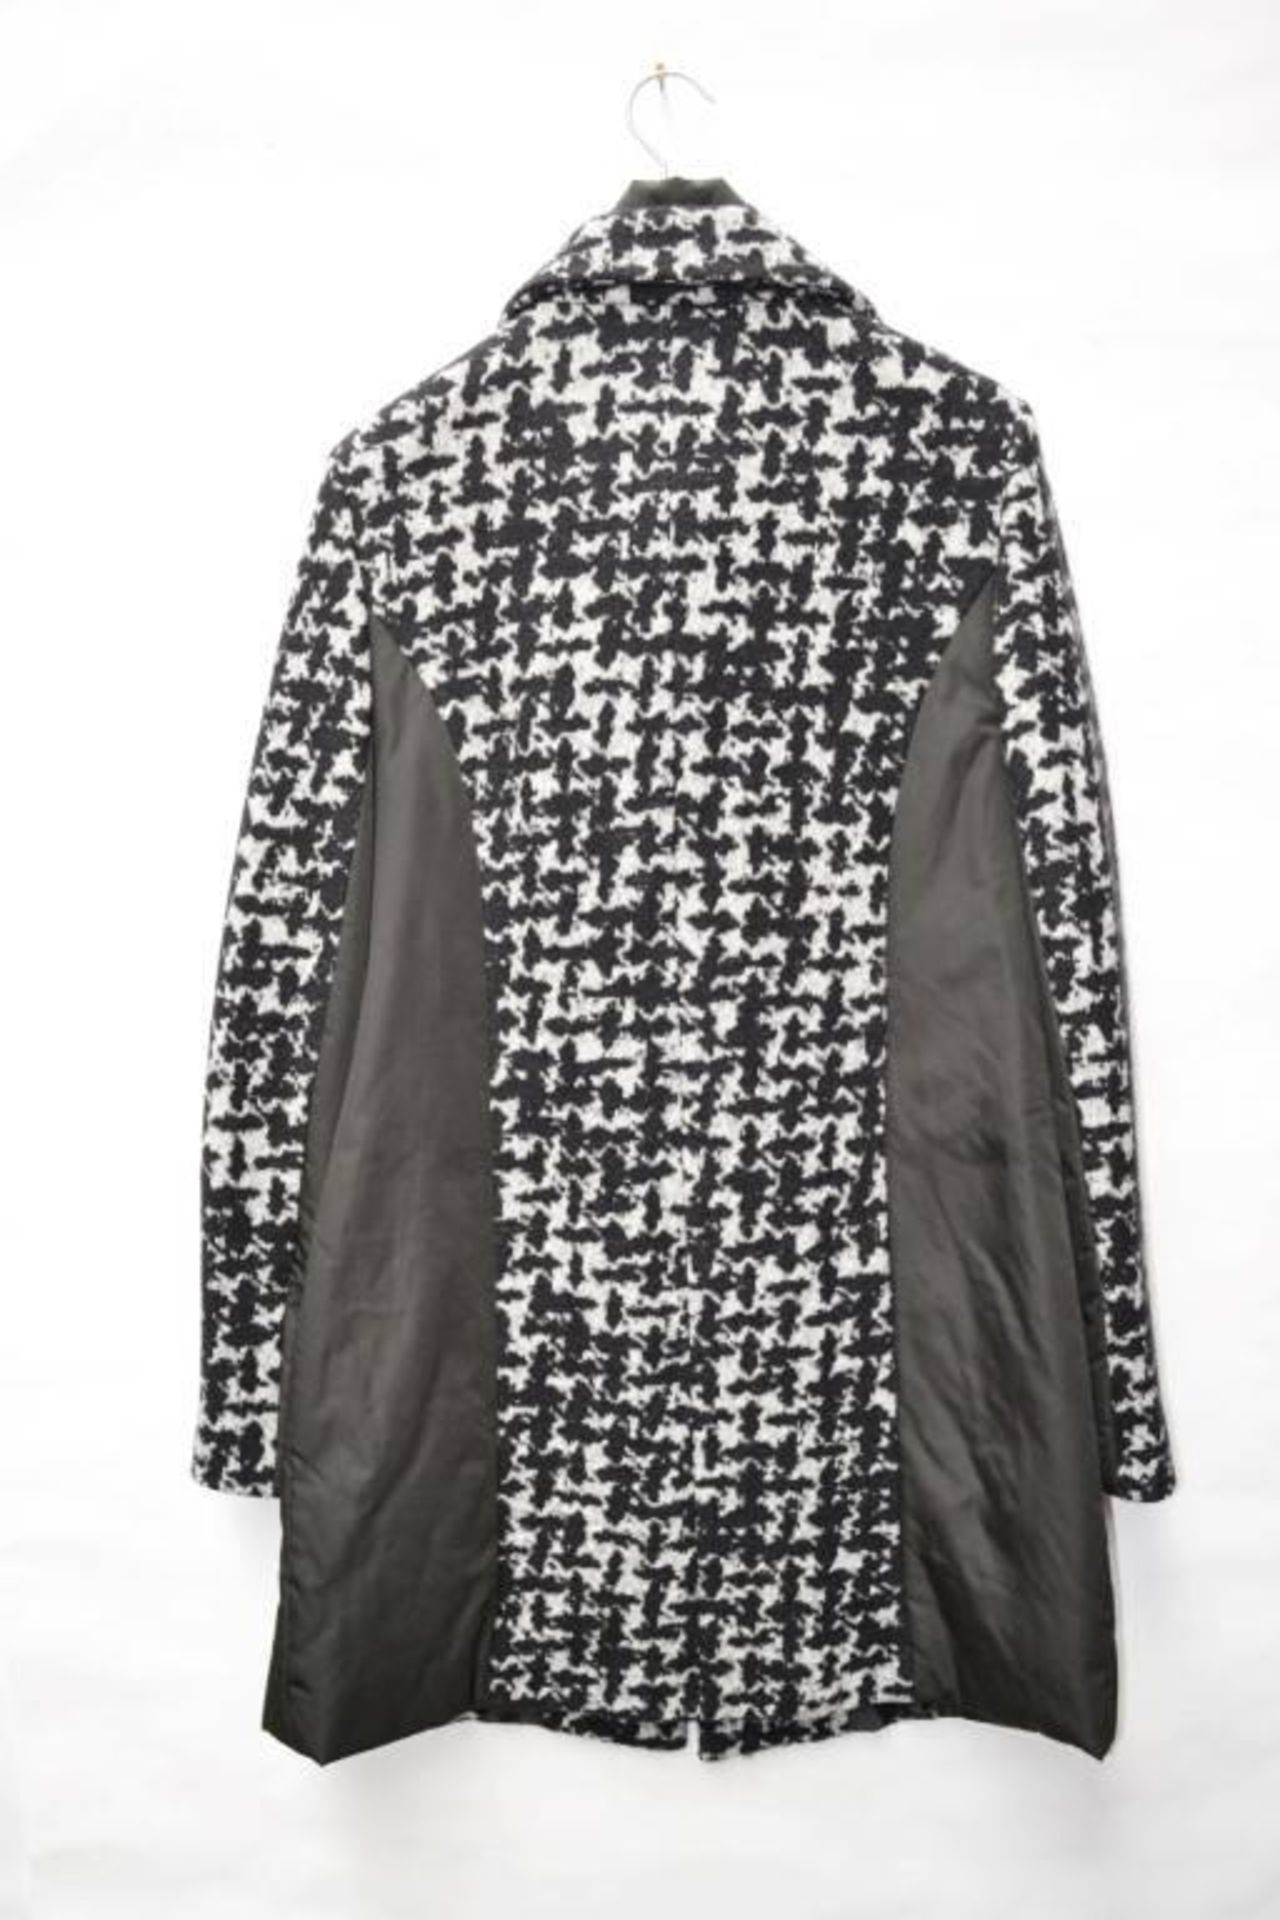 1 x Steilmann KSTN By Kirsten Womens Winter Coat - Wool/Cotton Blend Coat Featuring An Oversized Hou - Image 3 of 6